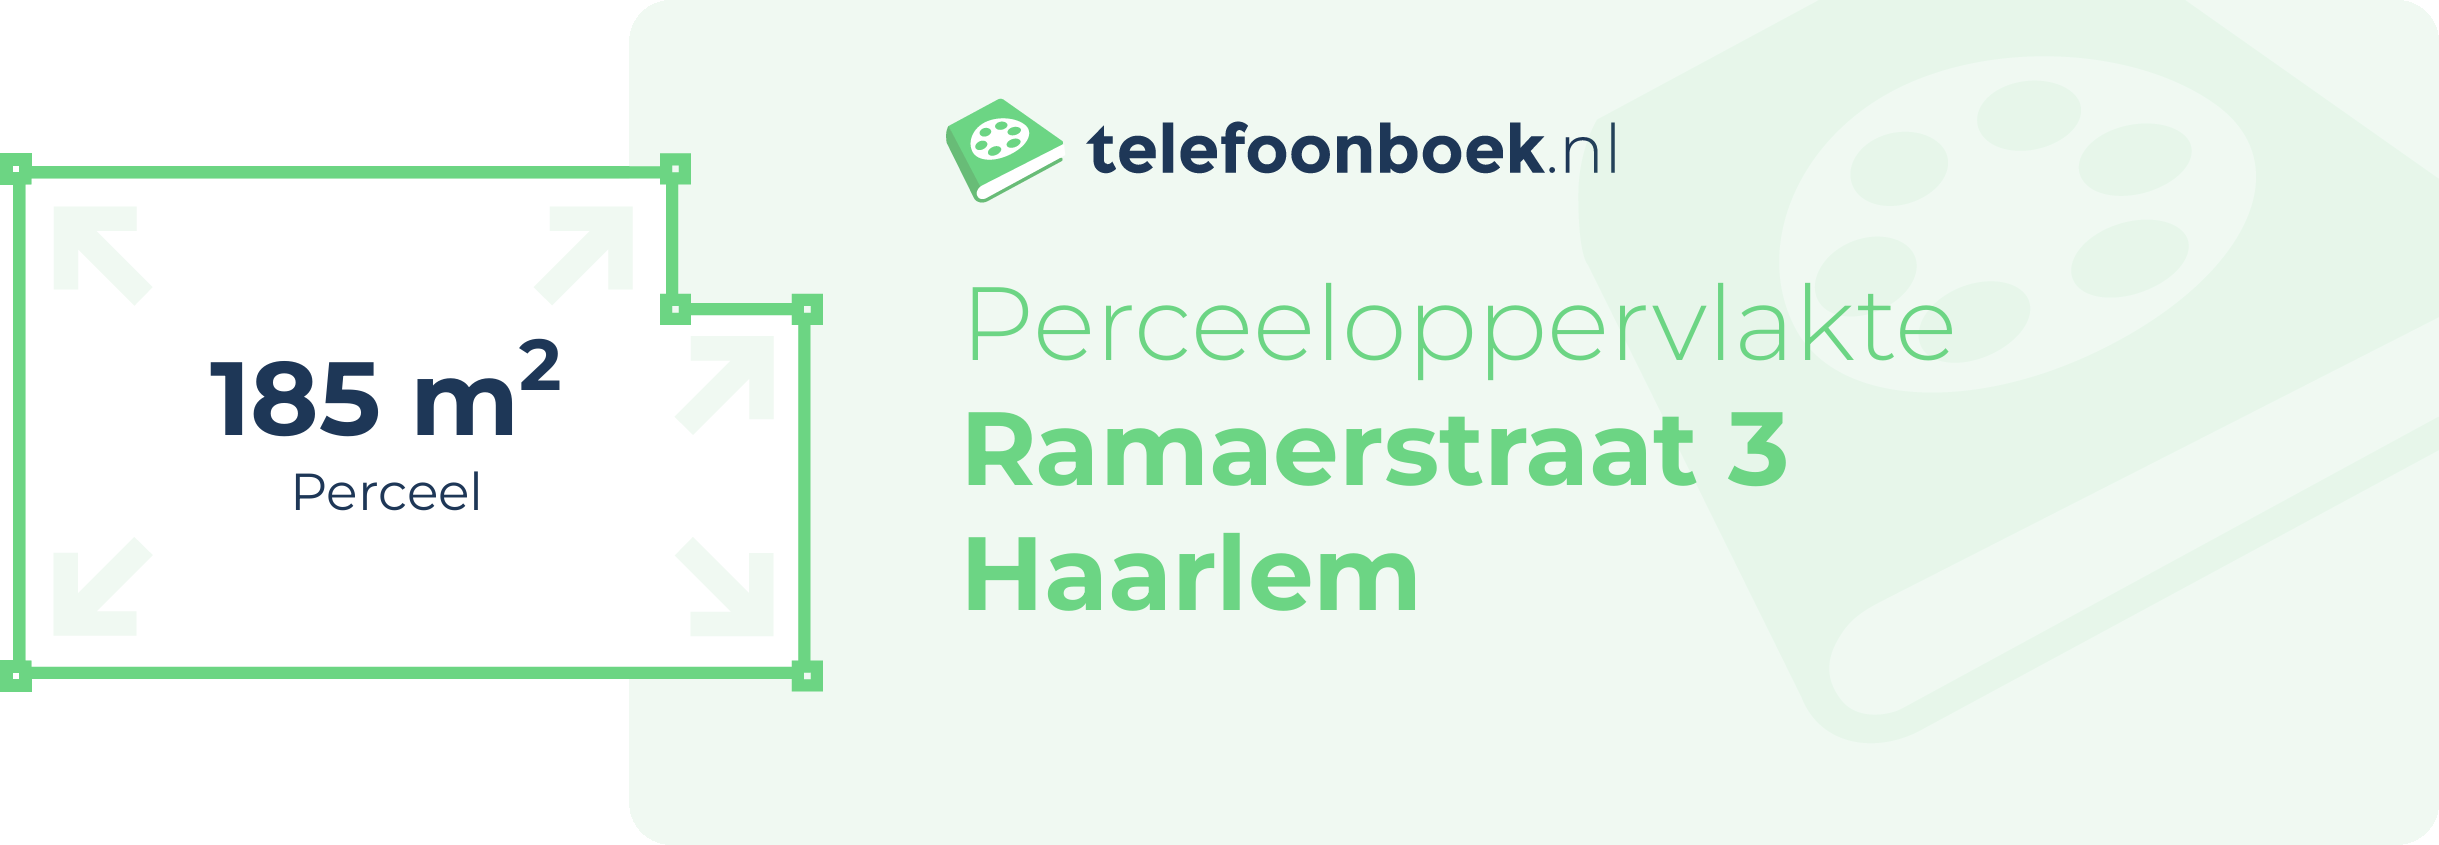 Perceeloppervlakte Ramaerstraat 3 Haarlem